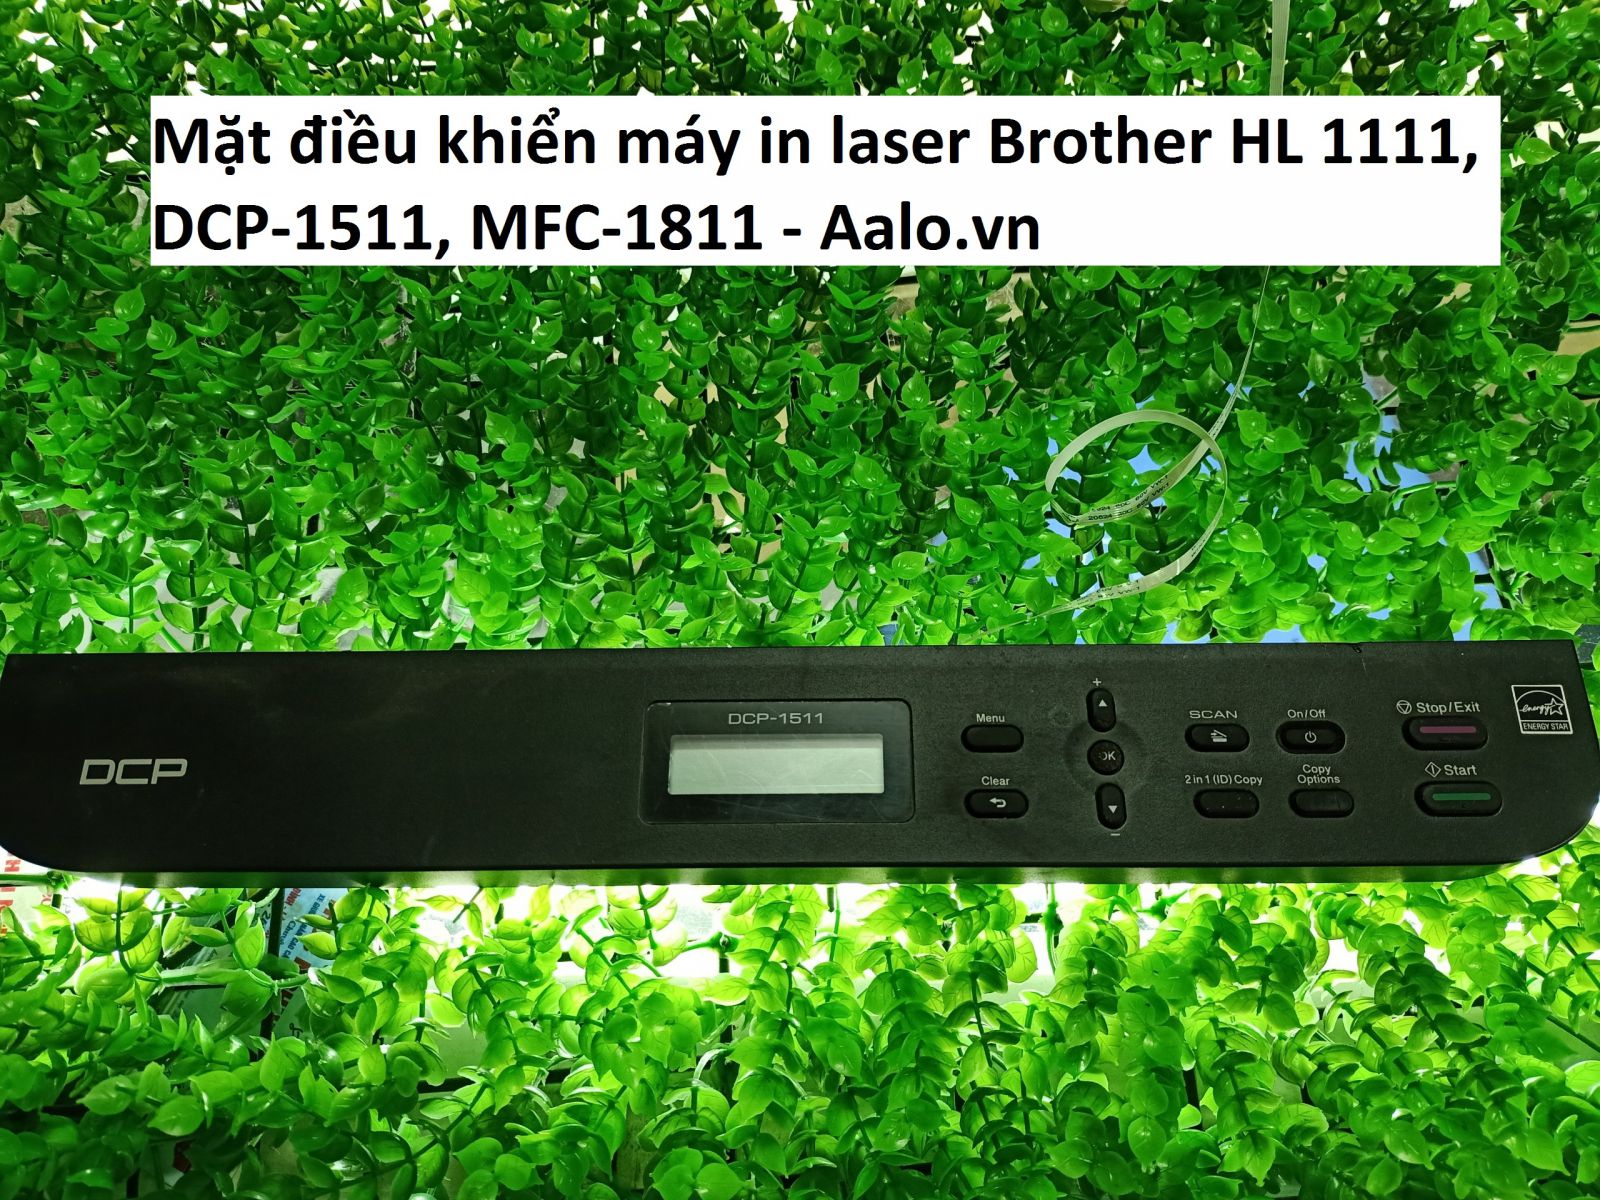 Mặt điều khiển máy in laser Brother HL 1111, DCP-1511, MFC-1811 - Aalo.vn